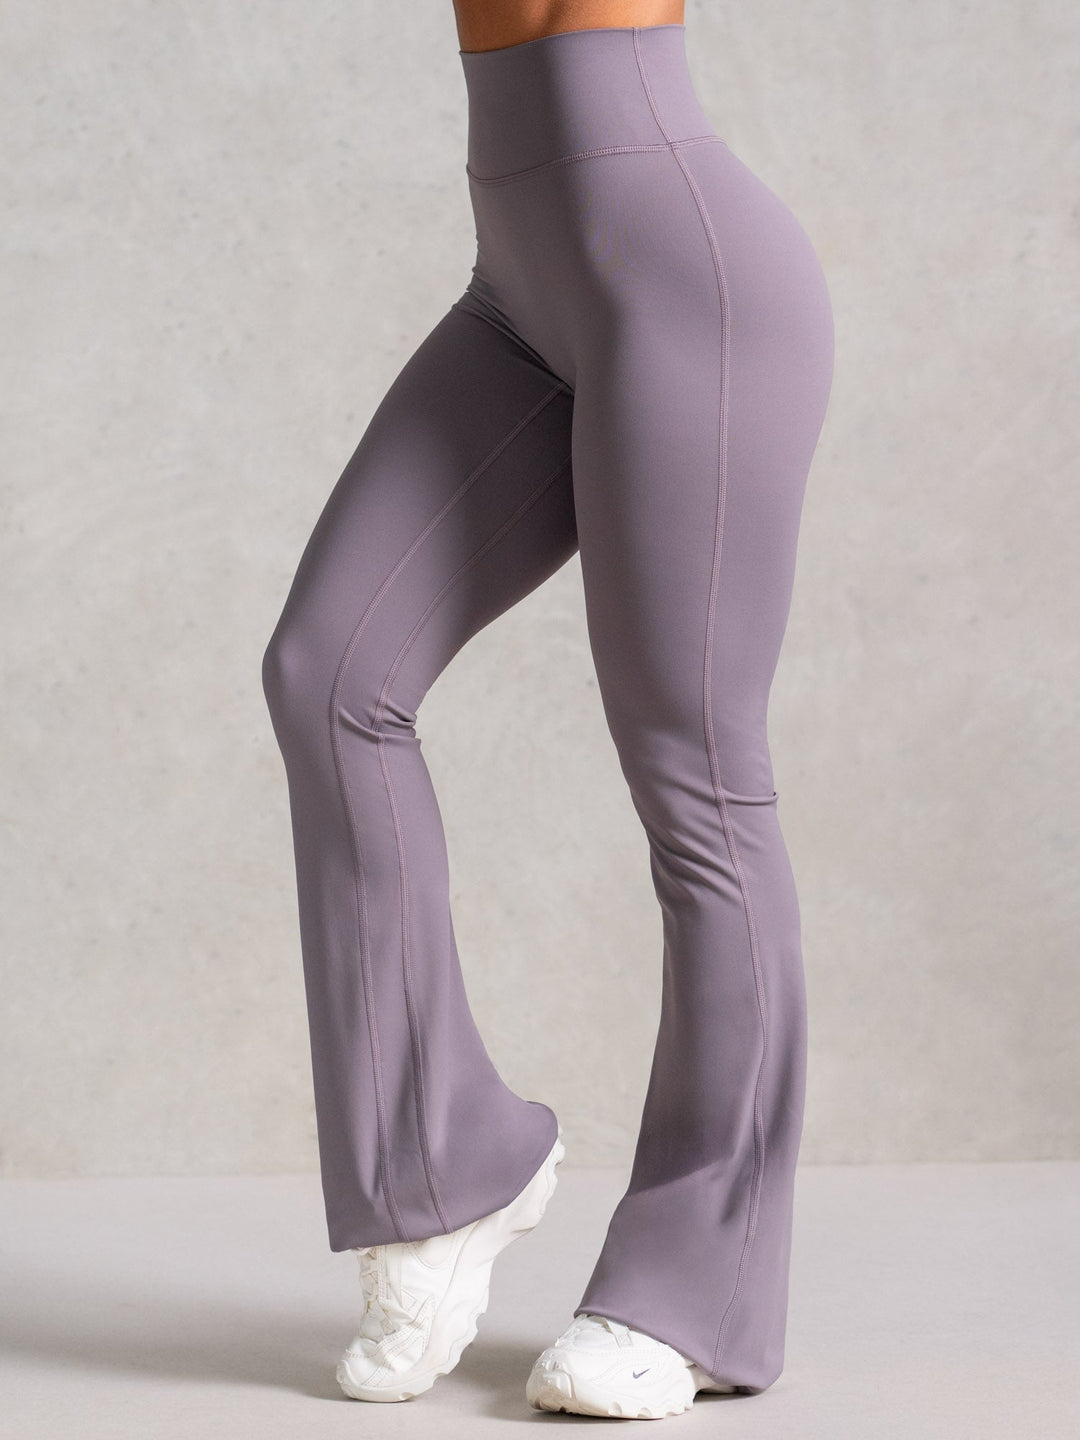 NKD Flared Leggings - Charcoal Clothing Ryderwear 